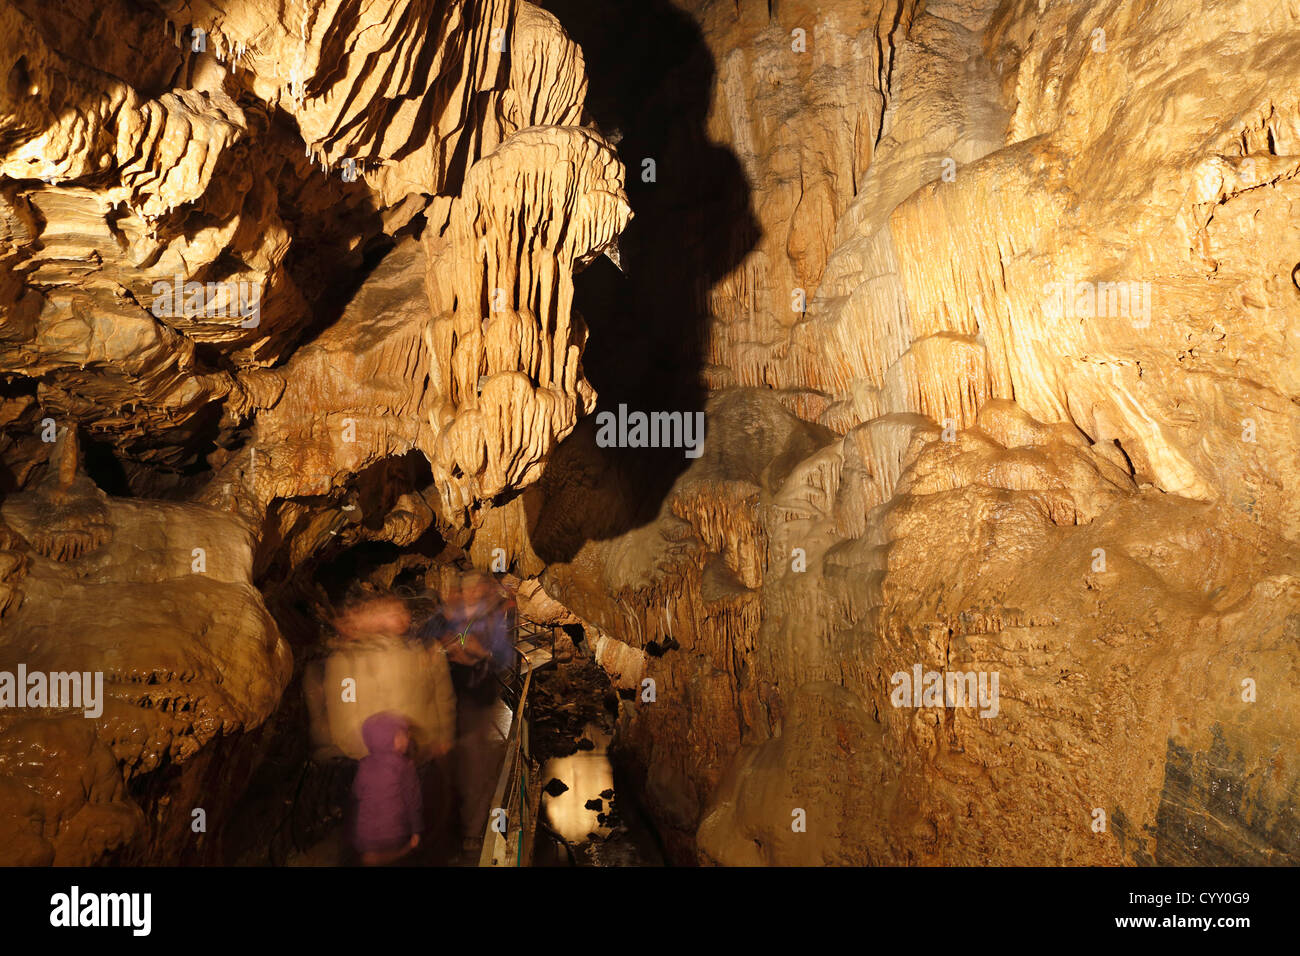 Austria, Styria, People at Lurgrotte stalactite cave Stock Photo